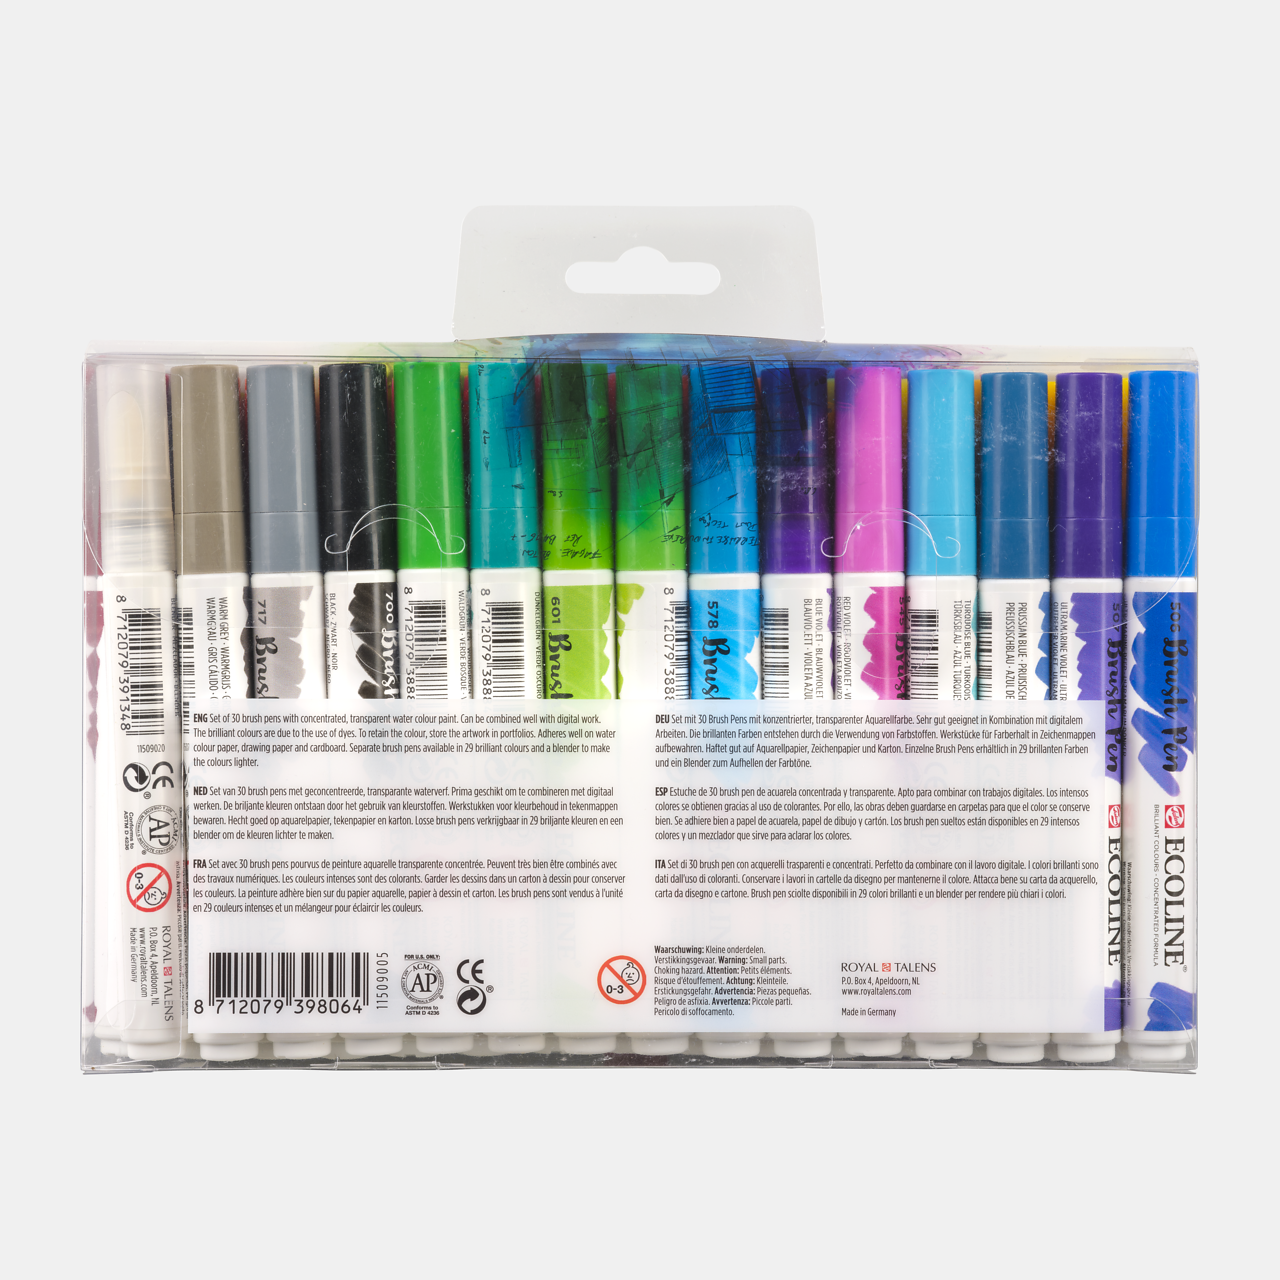 Ecoline Liquid Watercolor Brush Pen Set of 30 Additional Colors